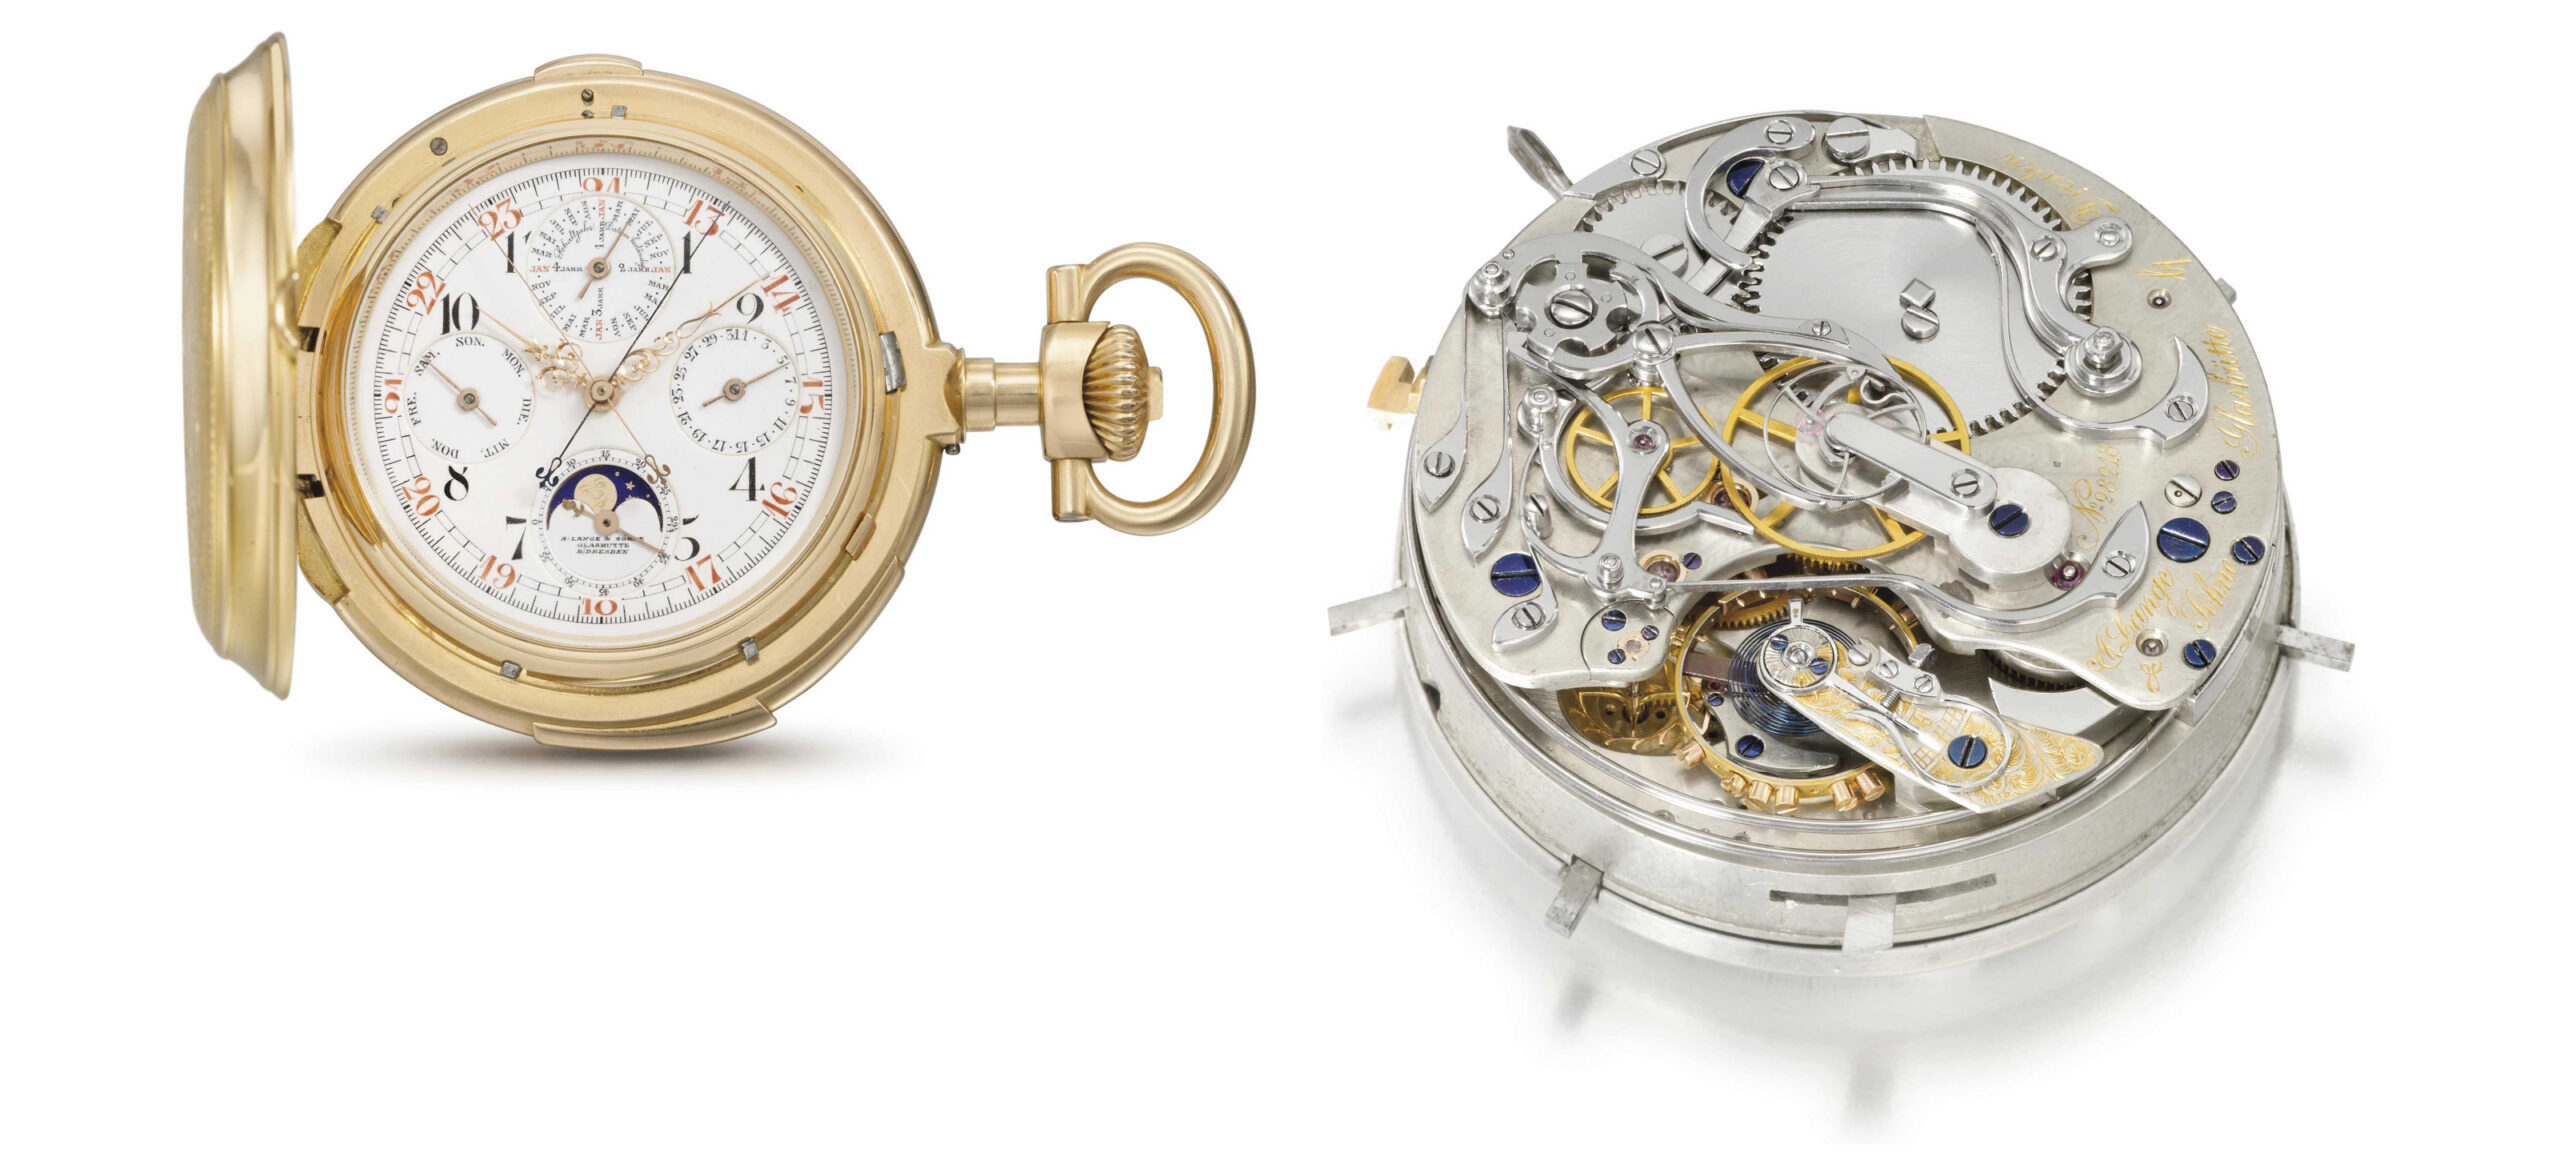 A Lange & Söhne grand complication pocket watch